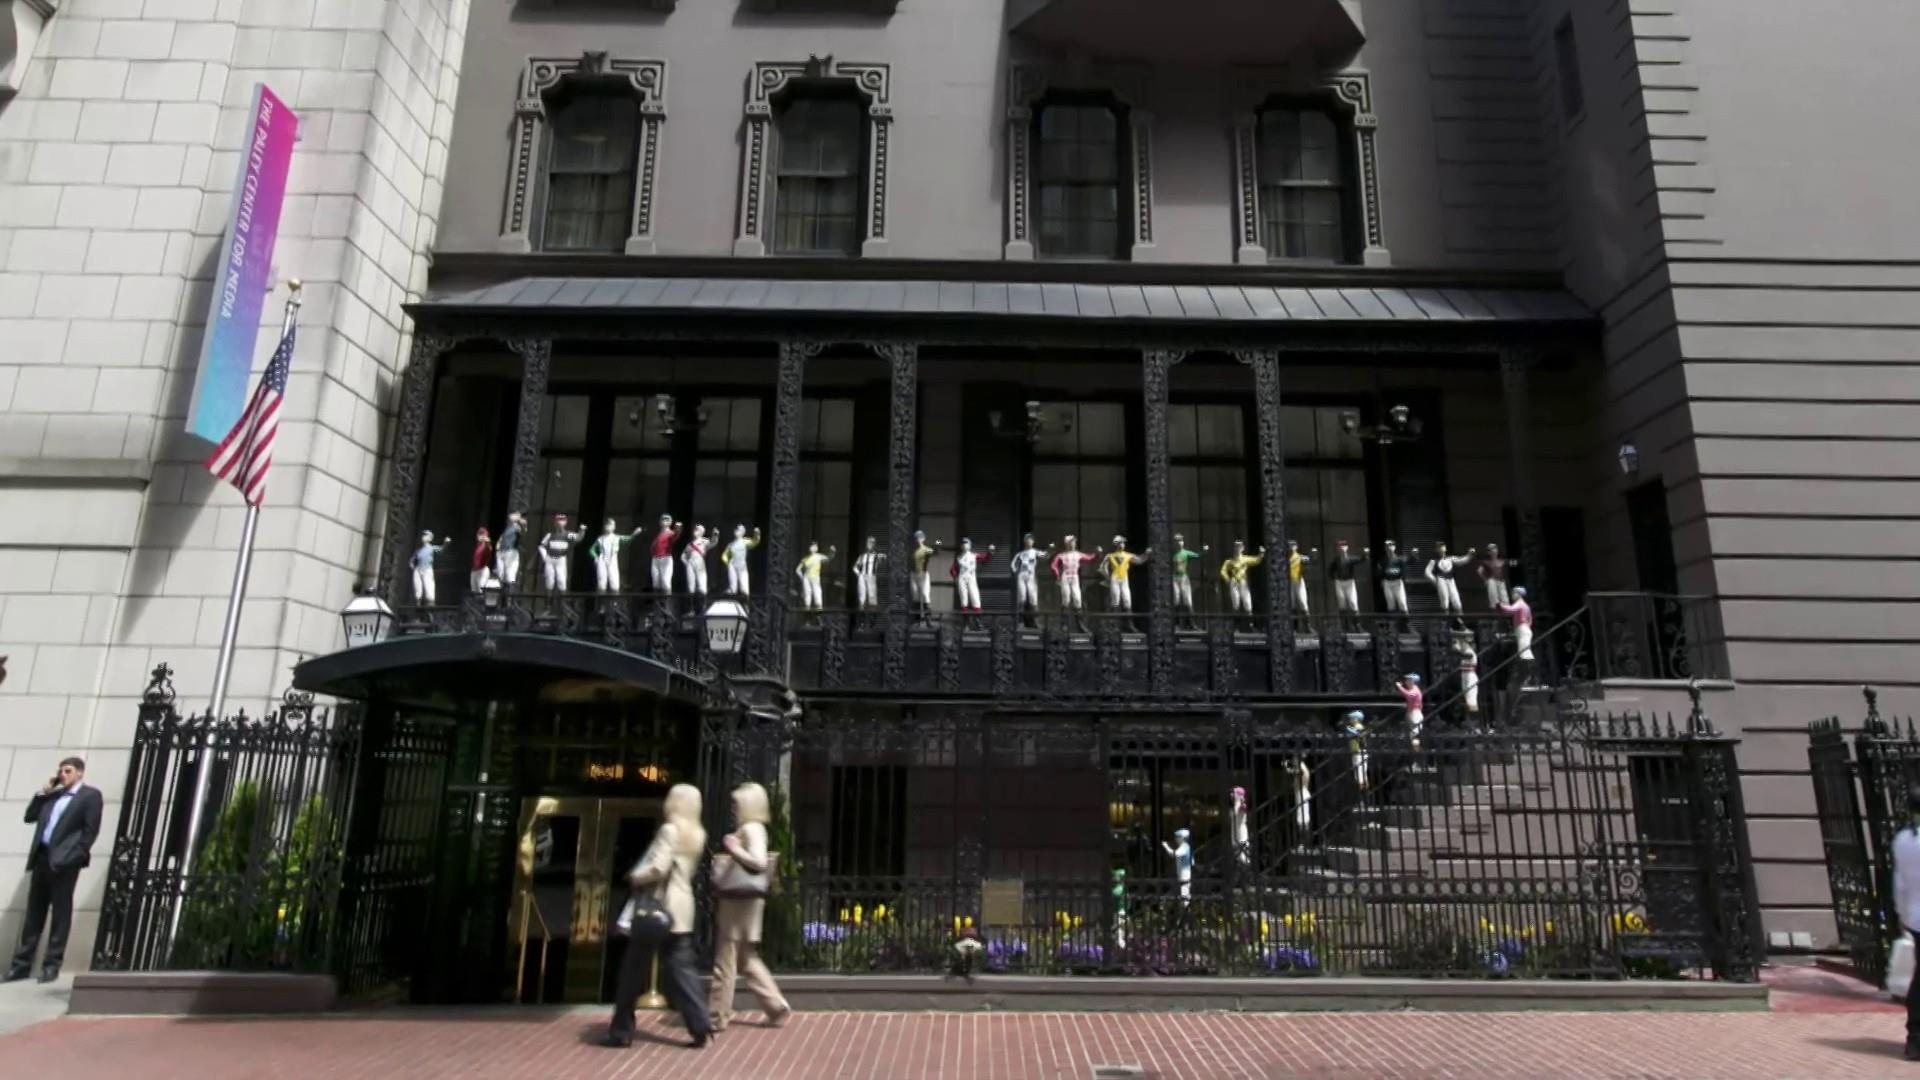 New York's iconic 21 Club set to close amid restaurant crisis